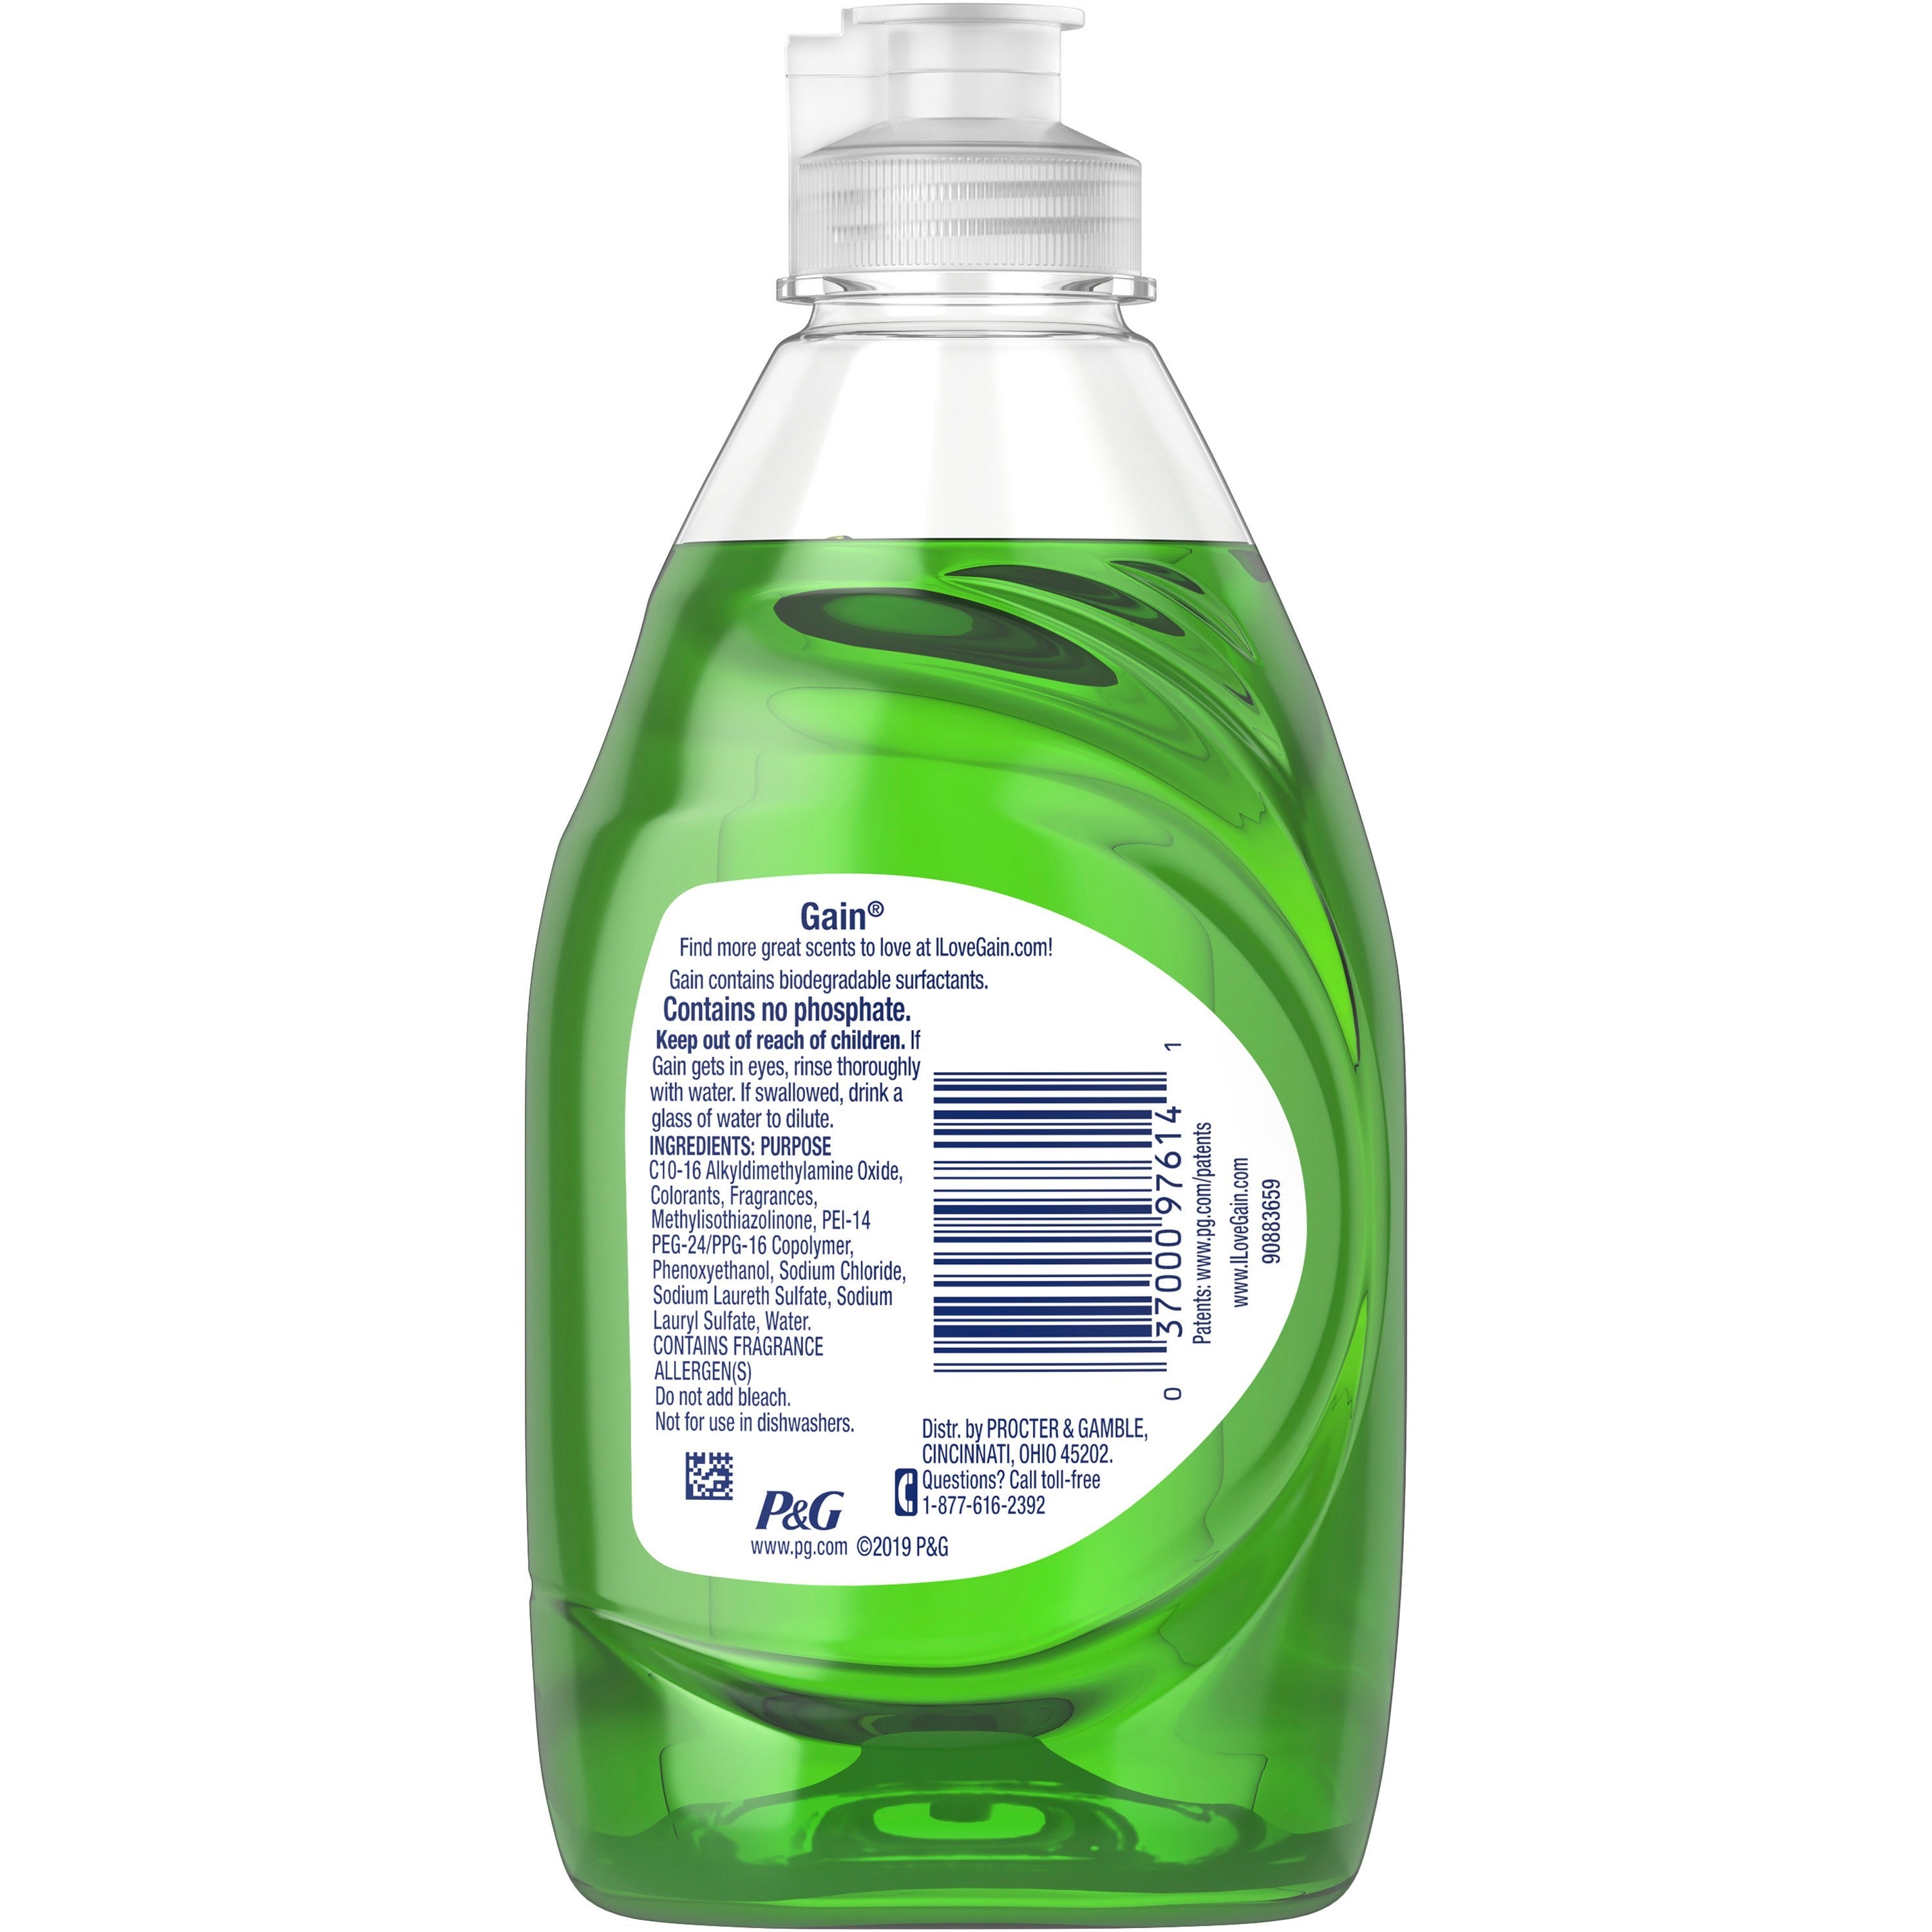 Gain Ultra Original Scent Dishwashing Liquid - 8 fl oz (0.3 quart) - Clean Scent - 12 / Carton - Green - 2